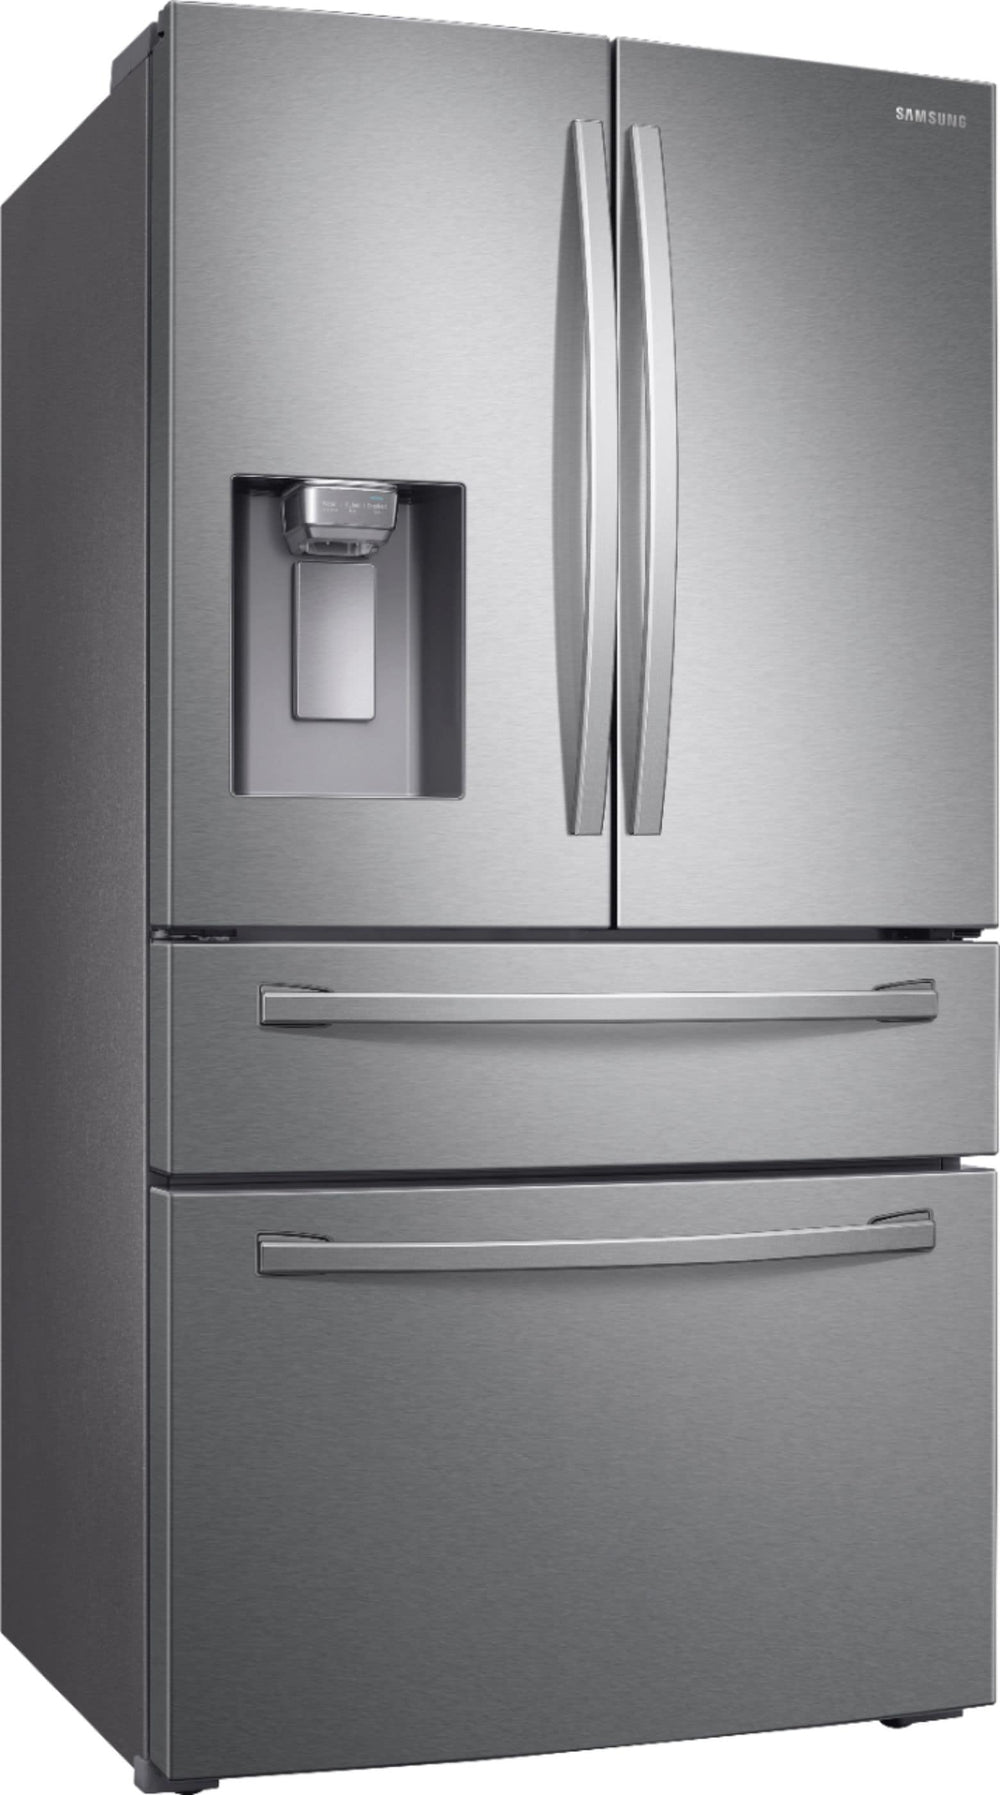 Samsung - 22.6 cu. ft. 4-Door French Door Counter Depth Refrigerator with FlexZone Drawer - Stainless steel_1